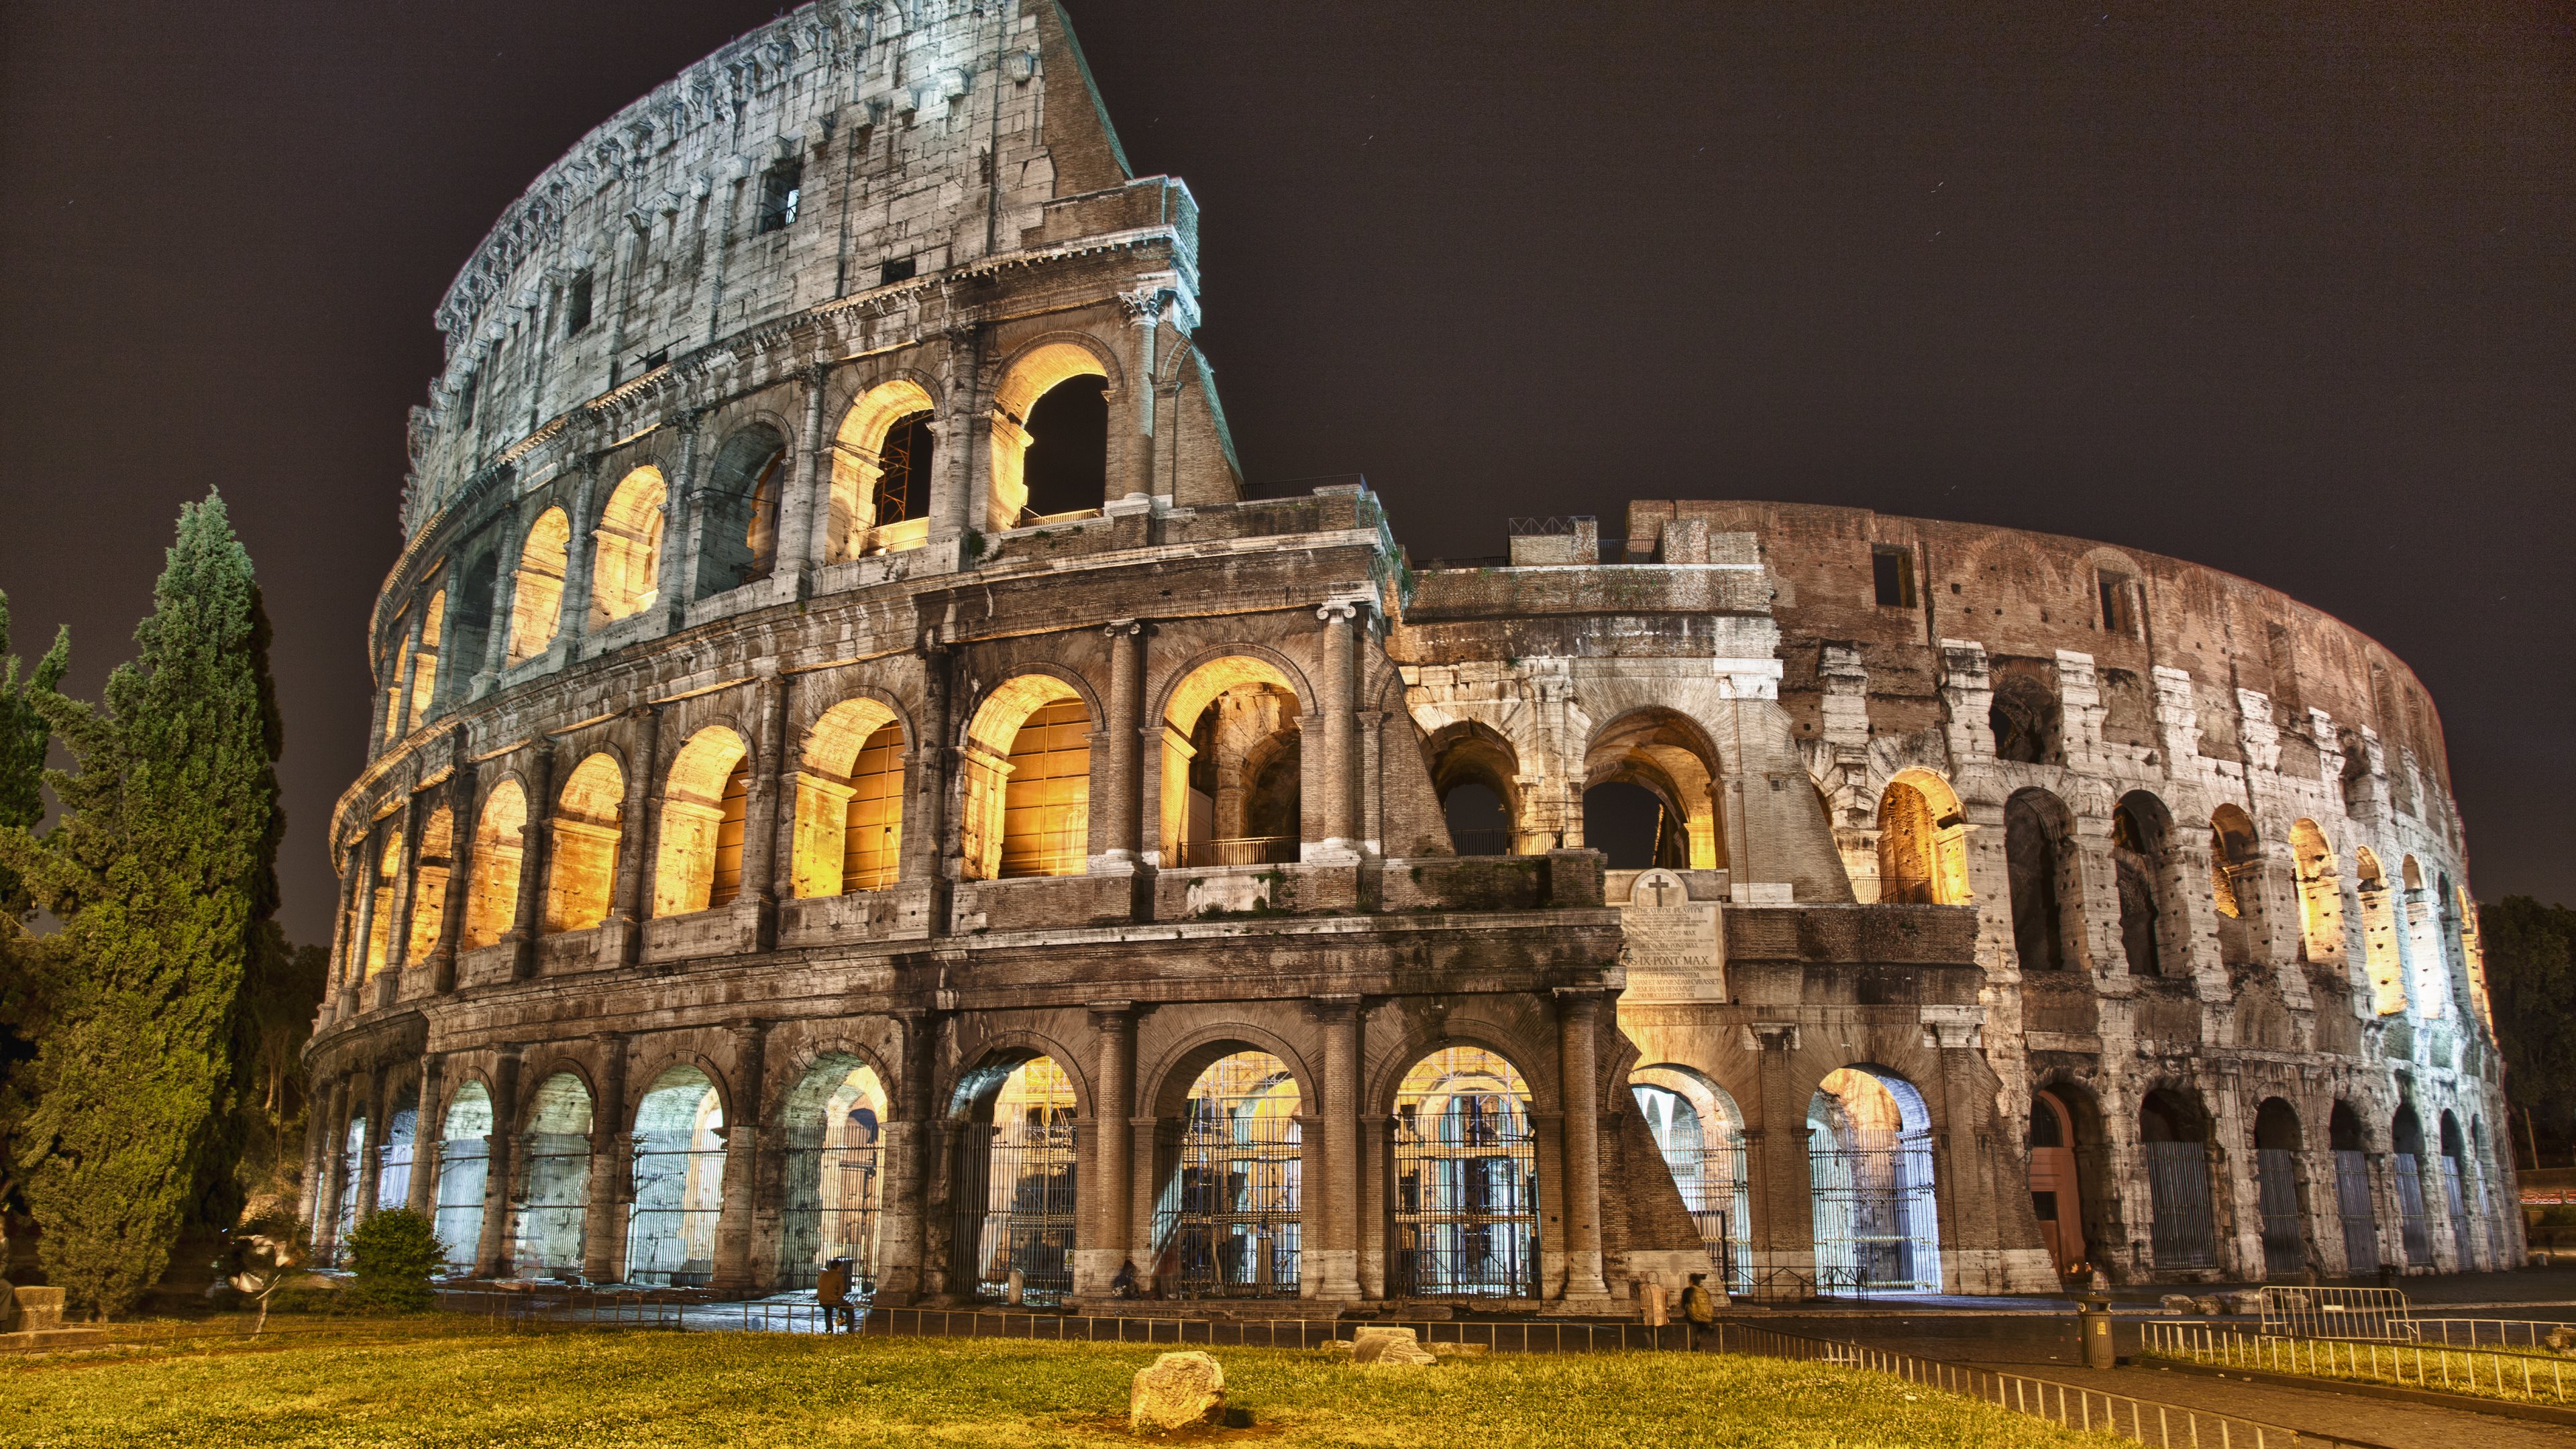 Colosseum 4k Ultra HD Wallpaper